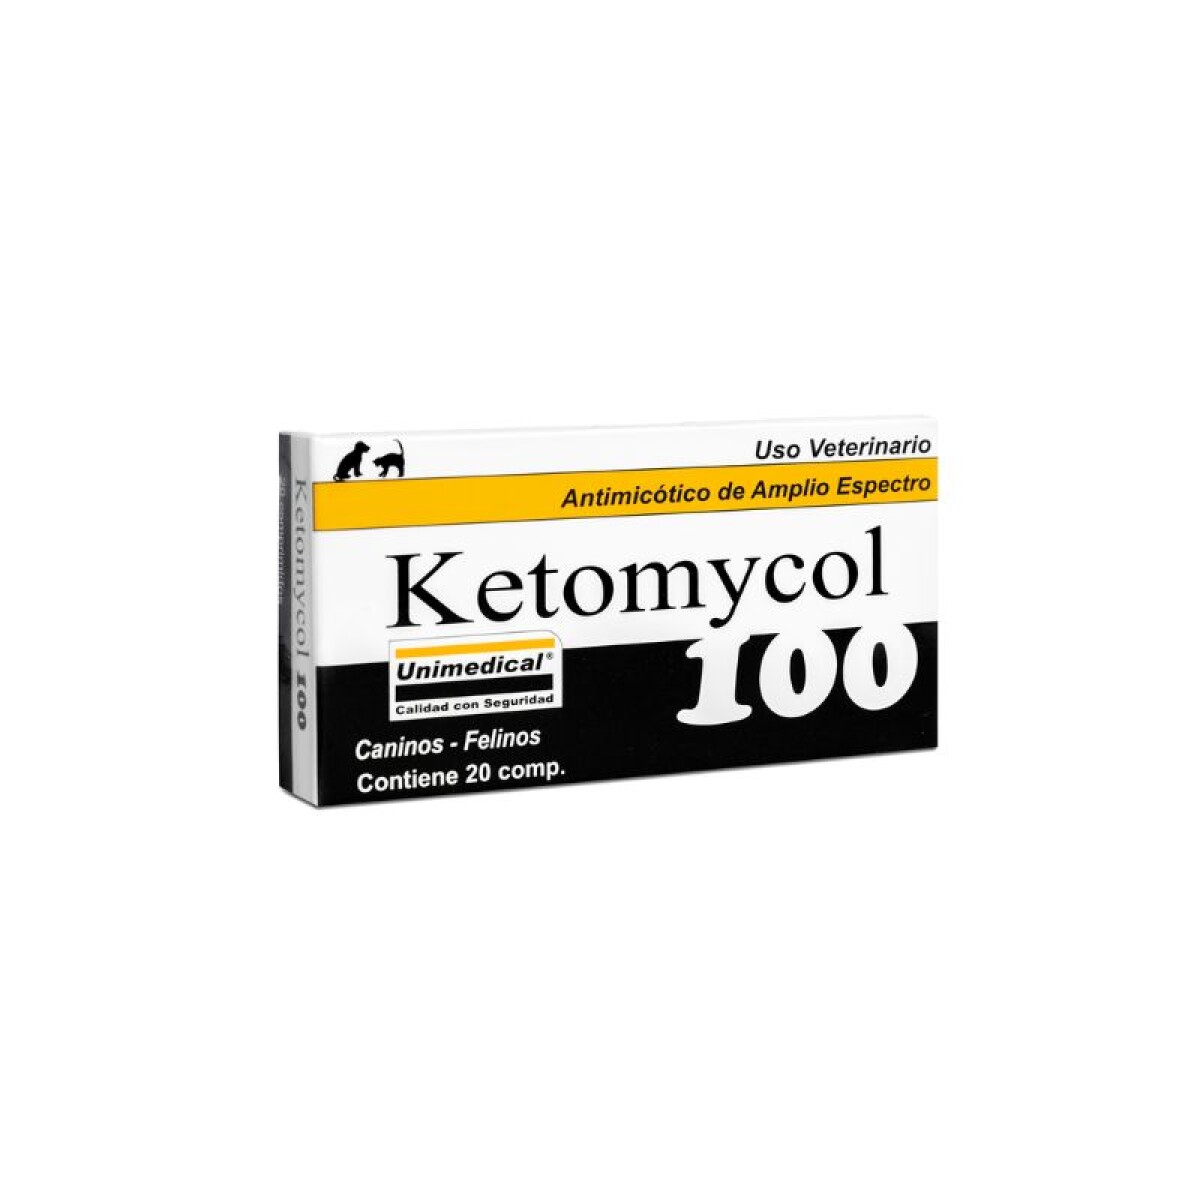 KETOMYCOL 100 - Ketomycol 100 